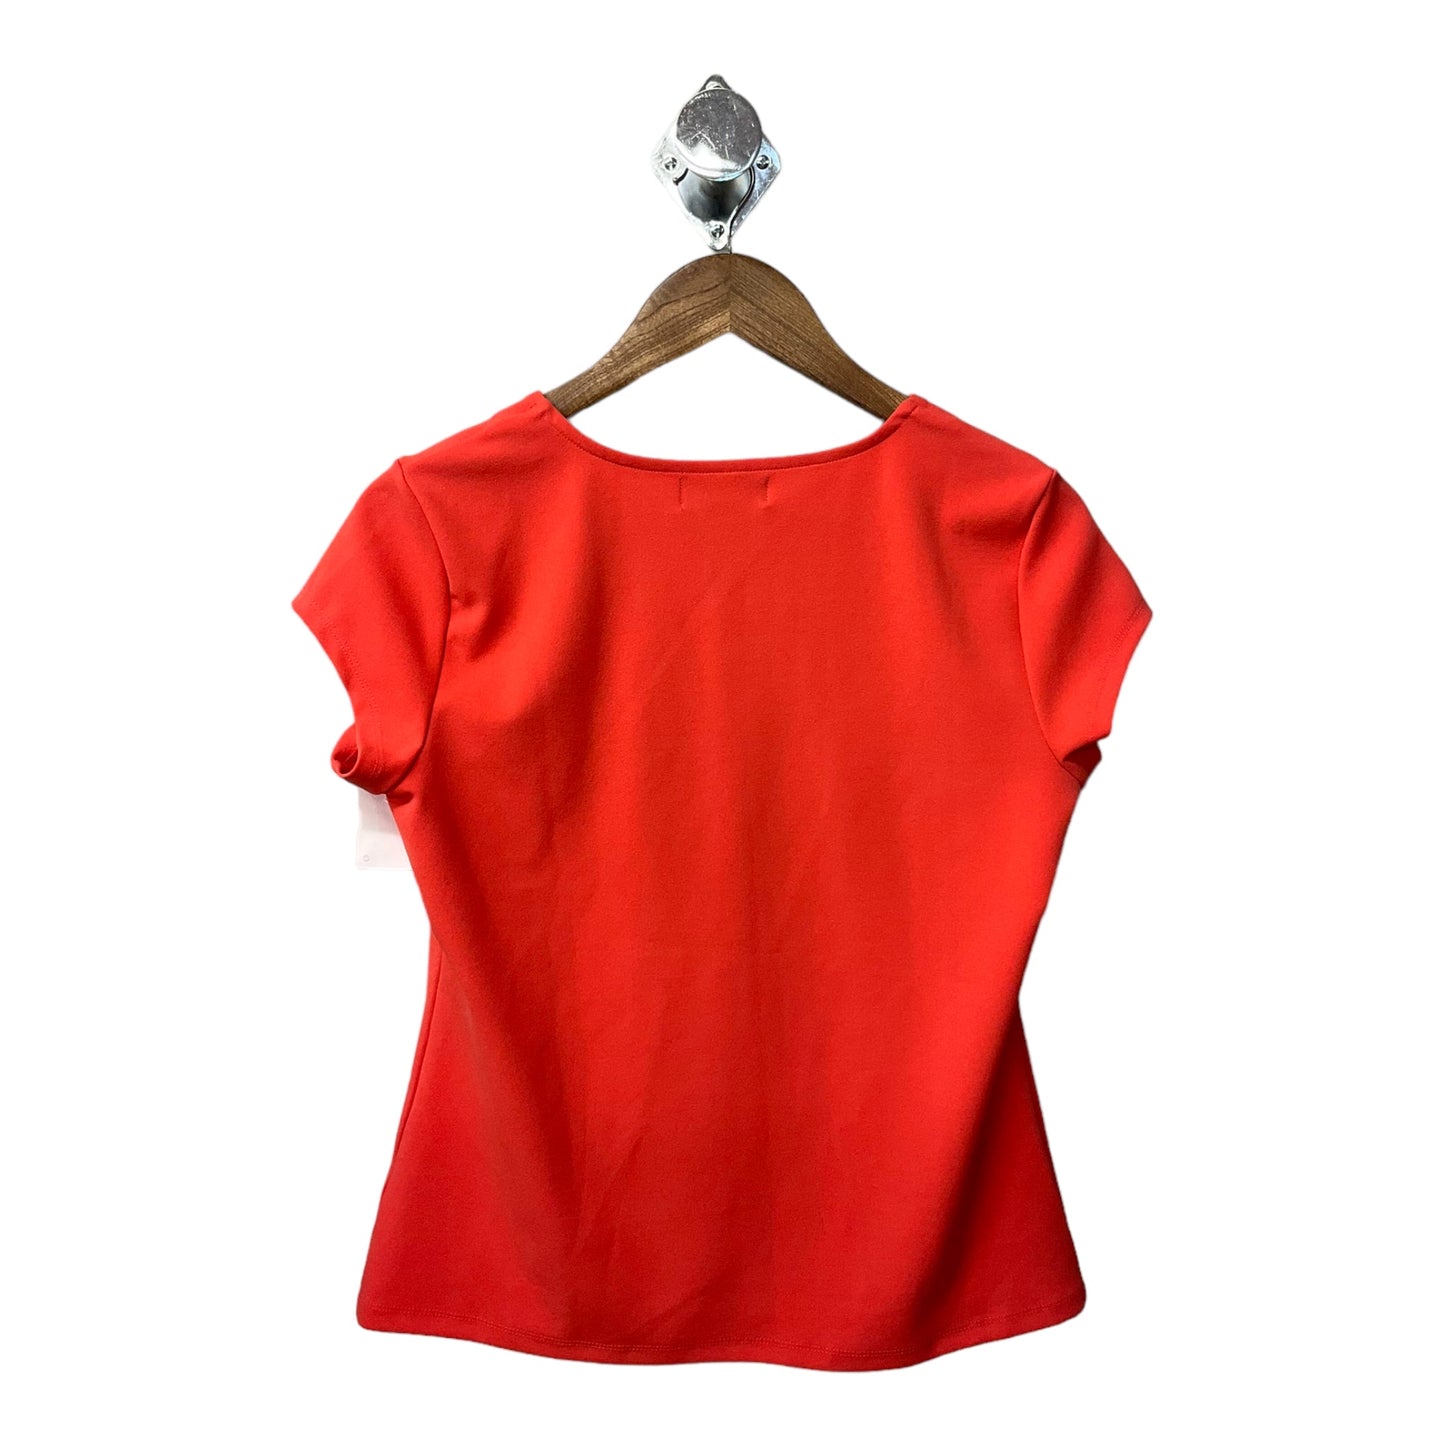 Top Short Sleeve By Liz Claiborne  Size: Petite  Medium